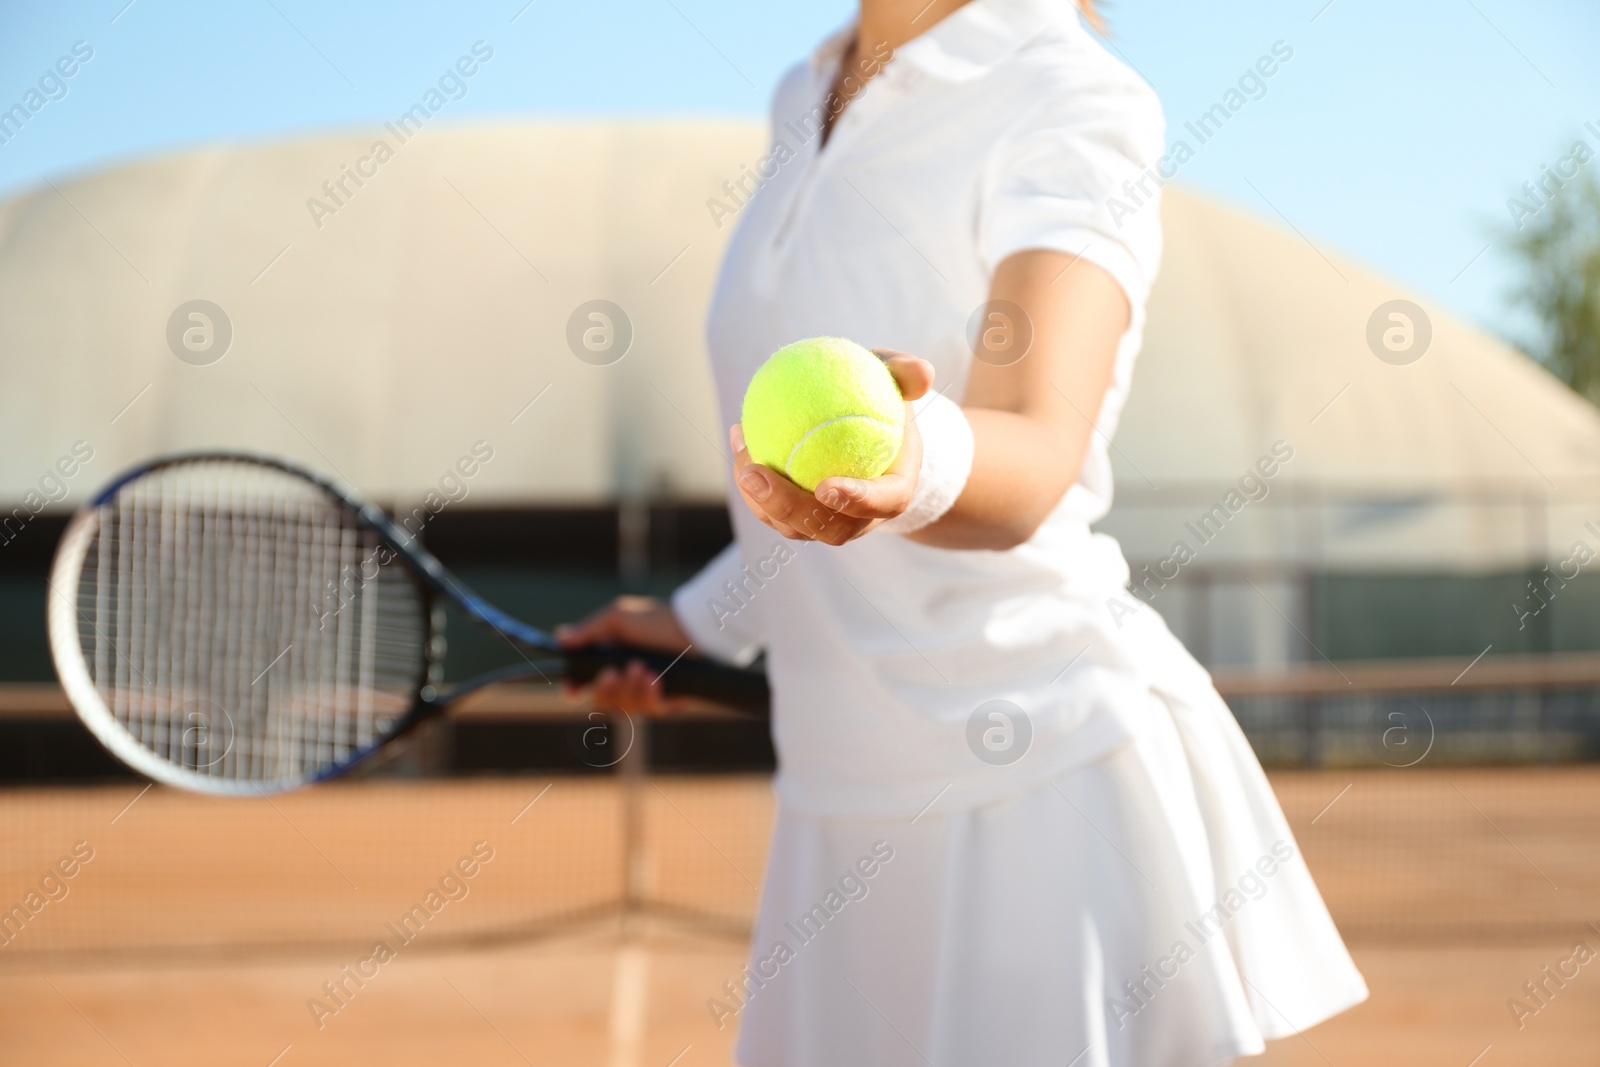 Photo of Sportswoman preparing to serve tennis ball at court, closeup